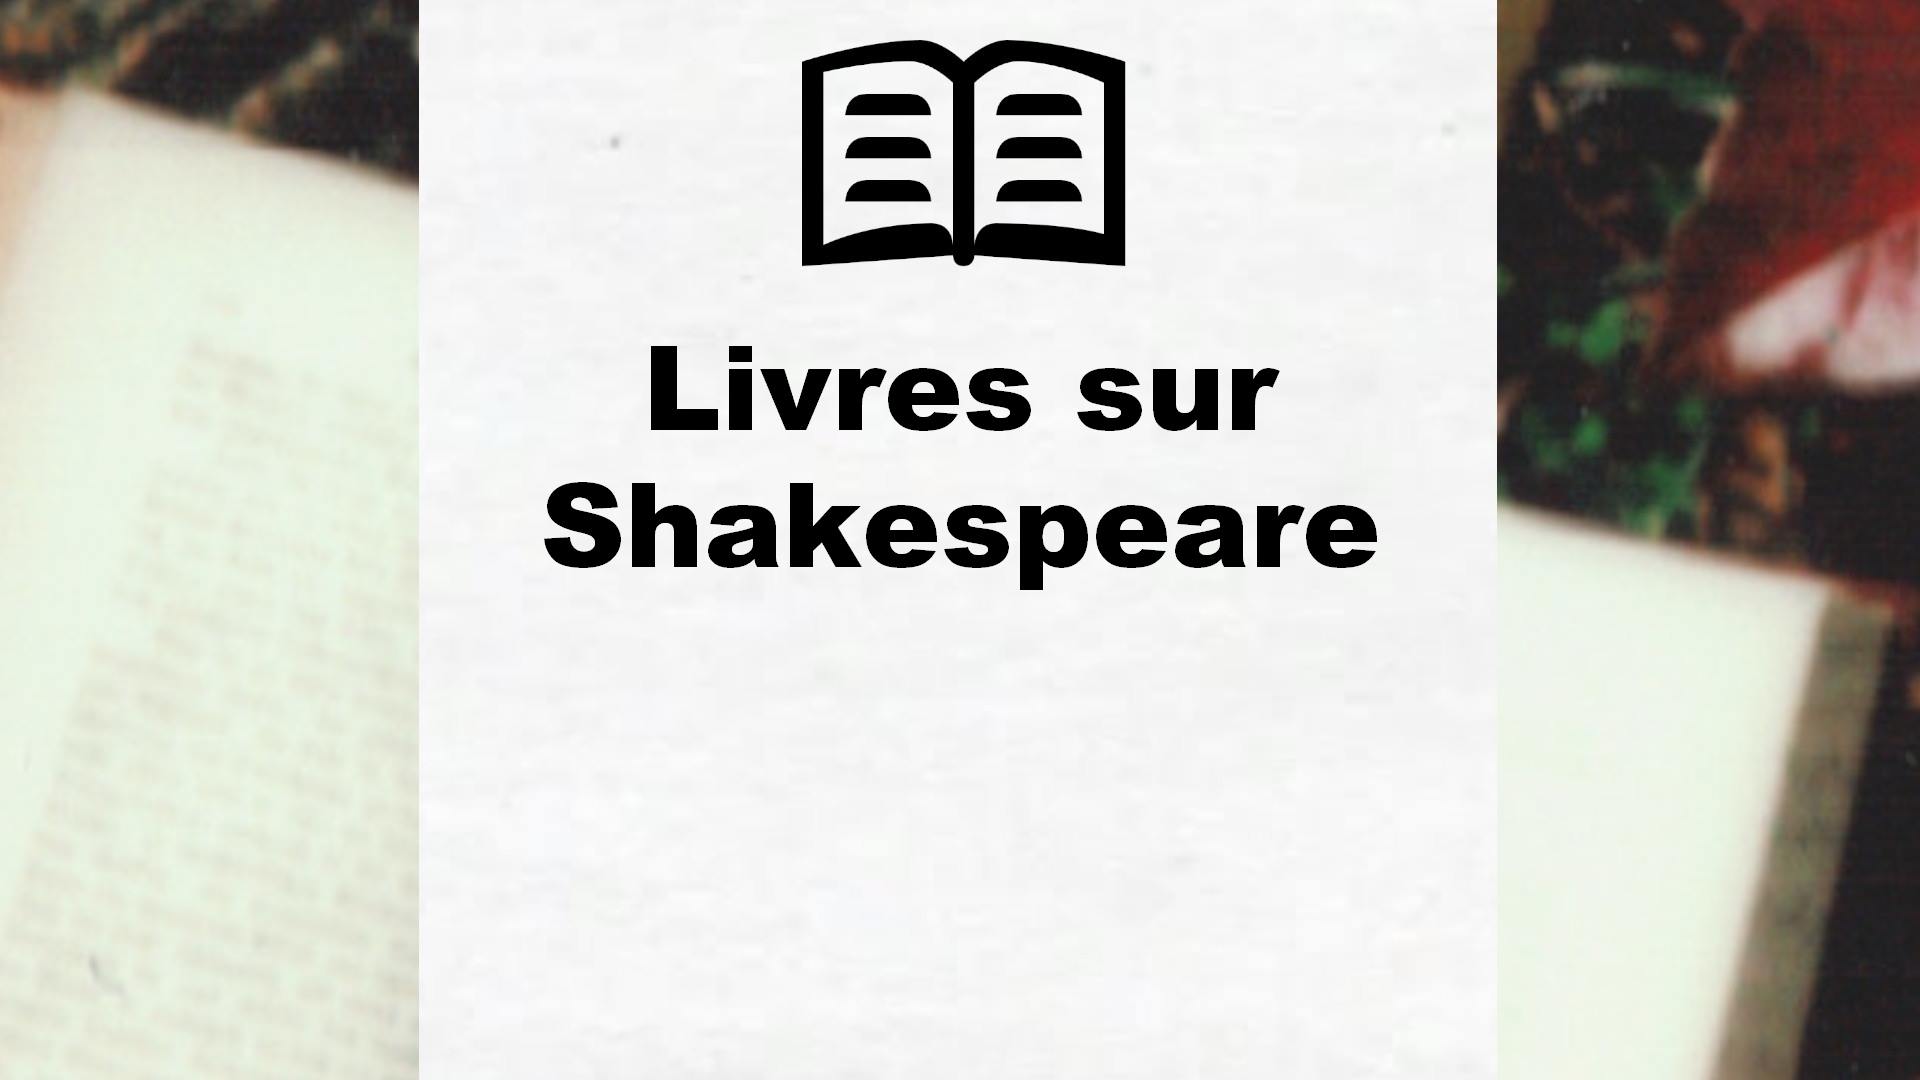 Livres sur Shakespeare